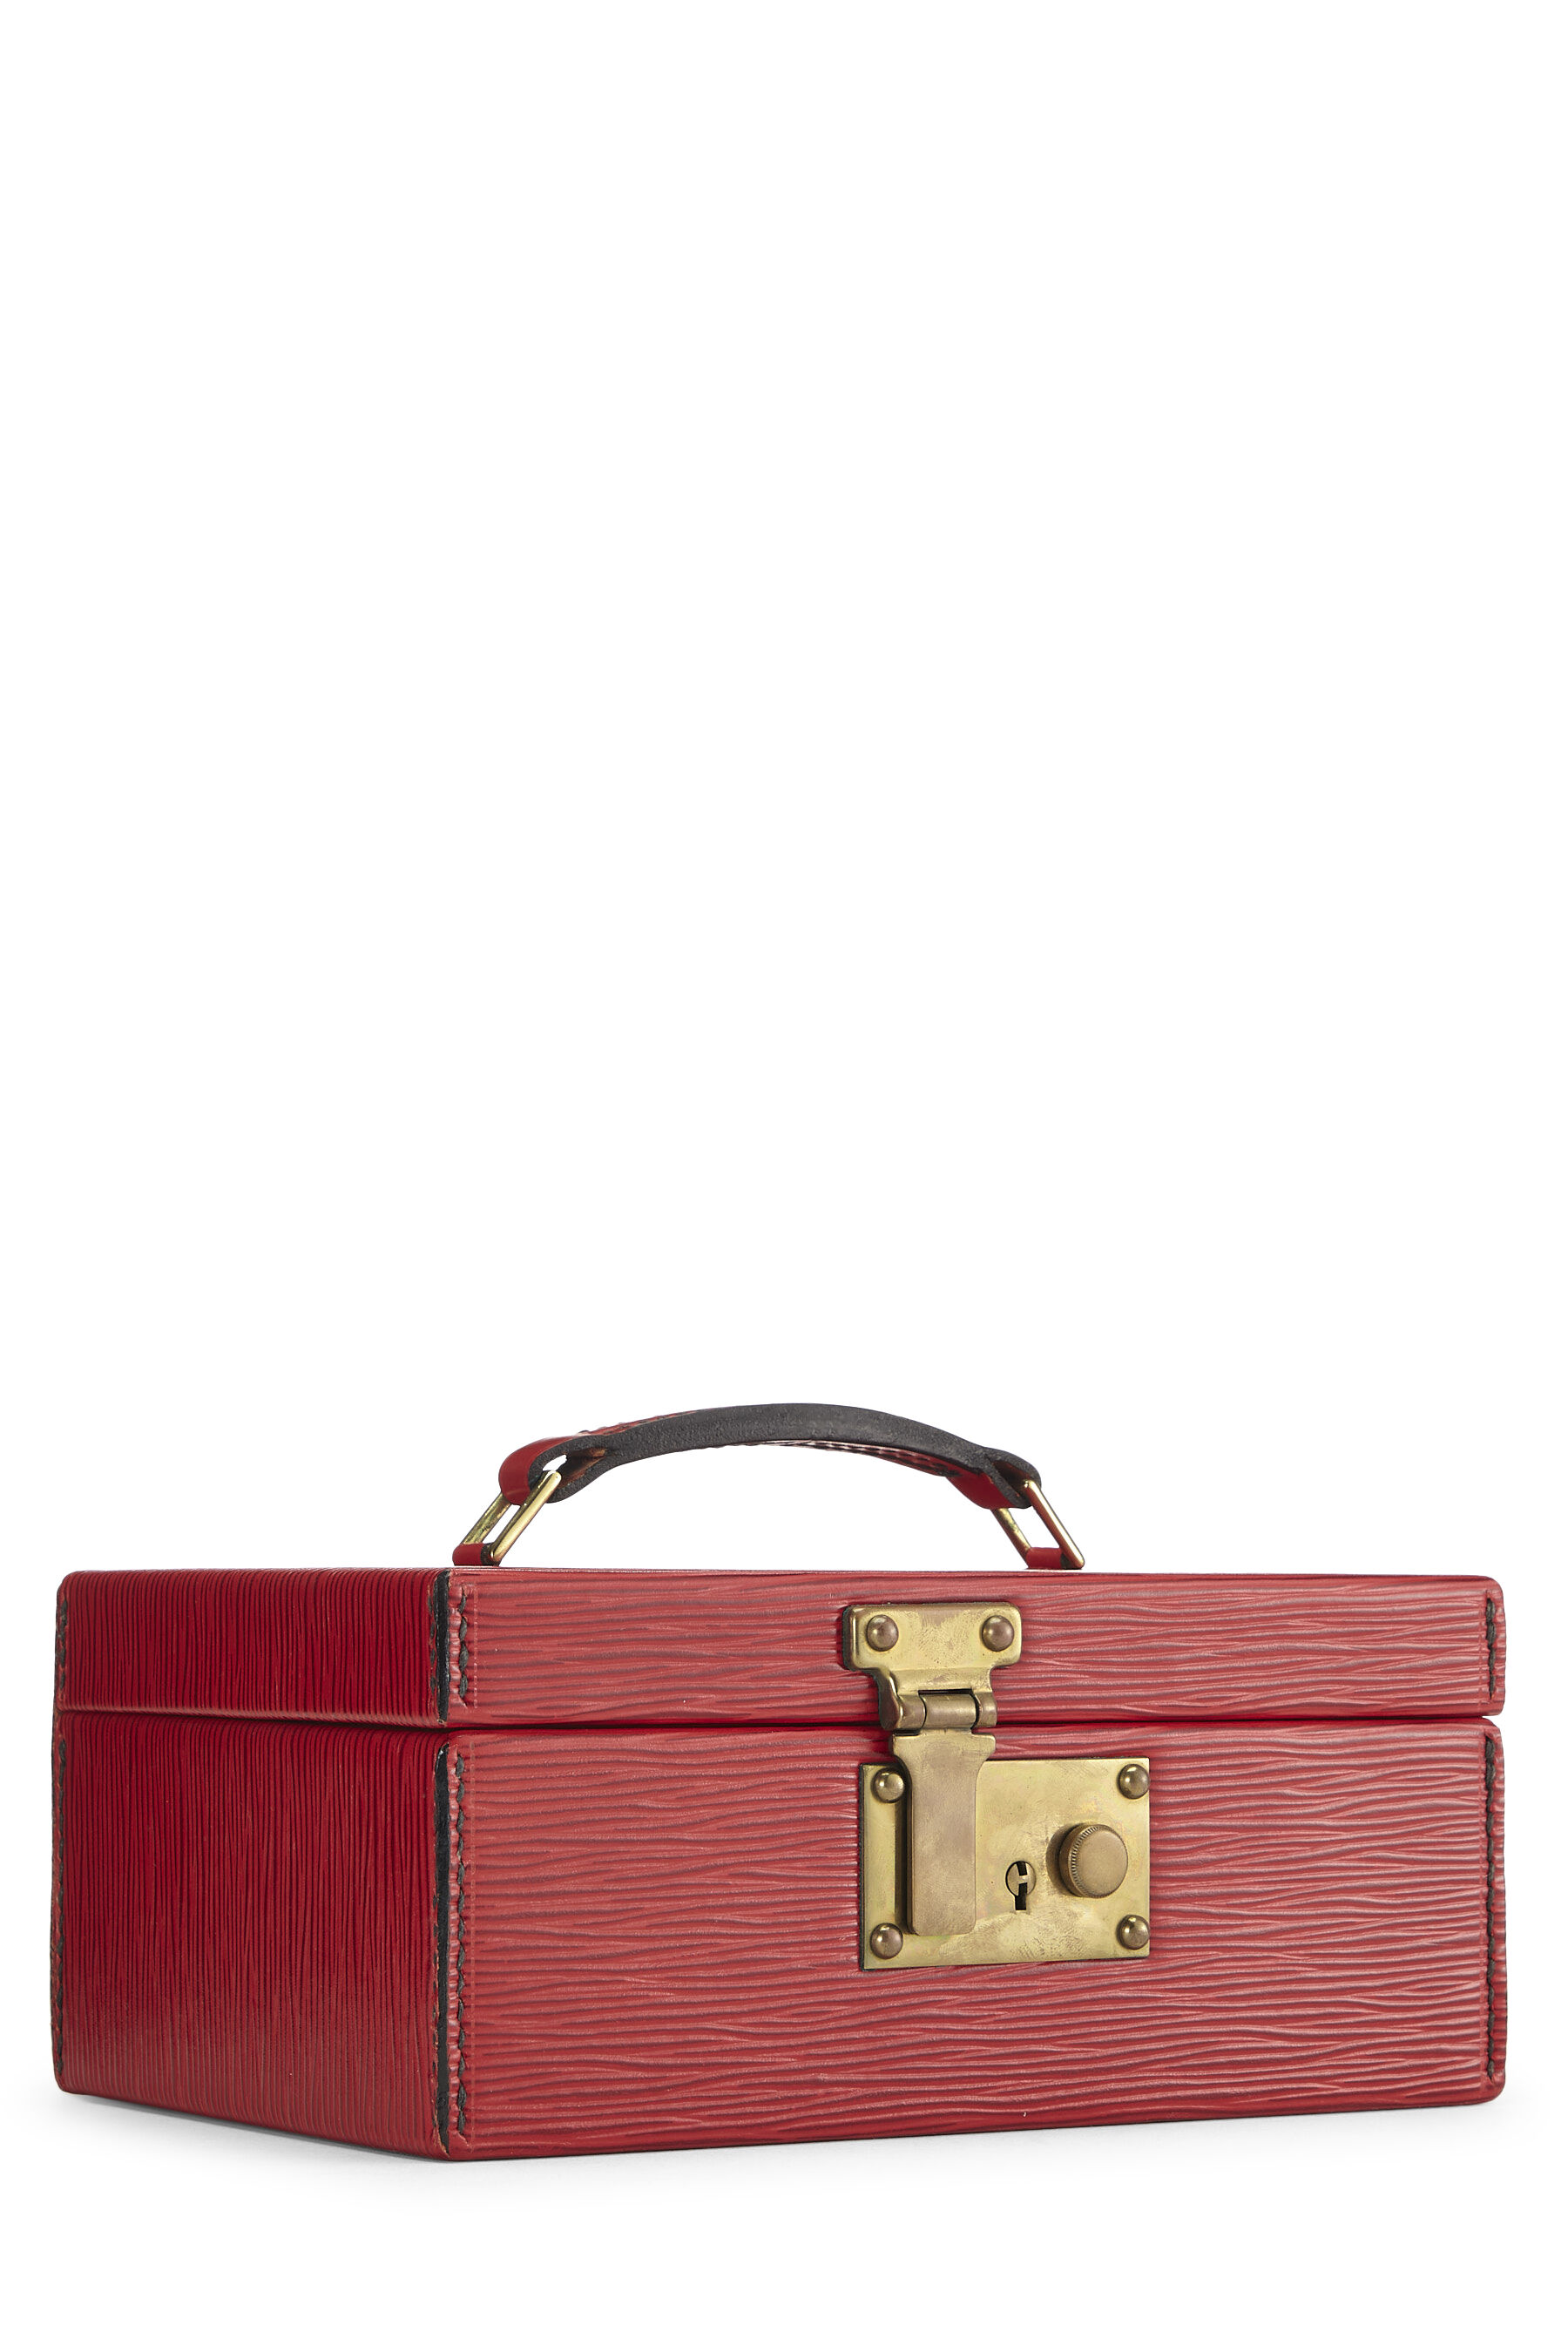 Louis Vuitton Box Red Bags & Handbags for Women